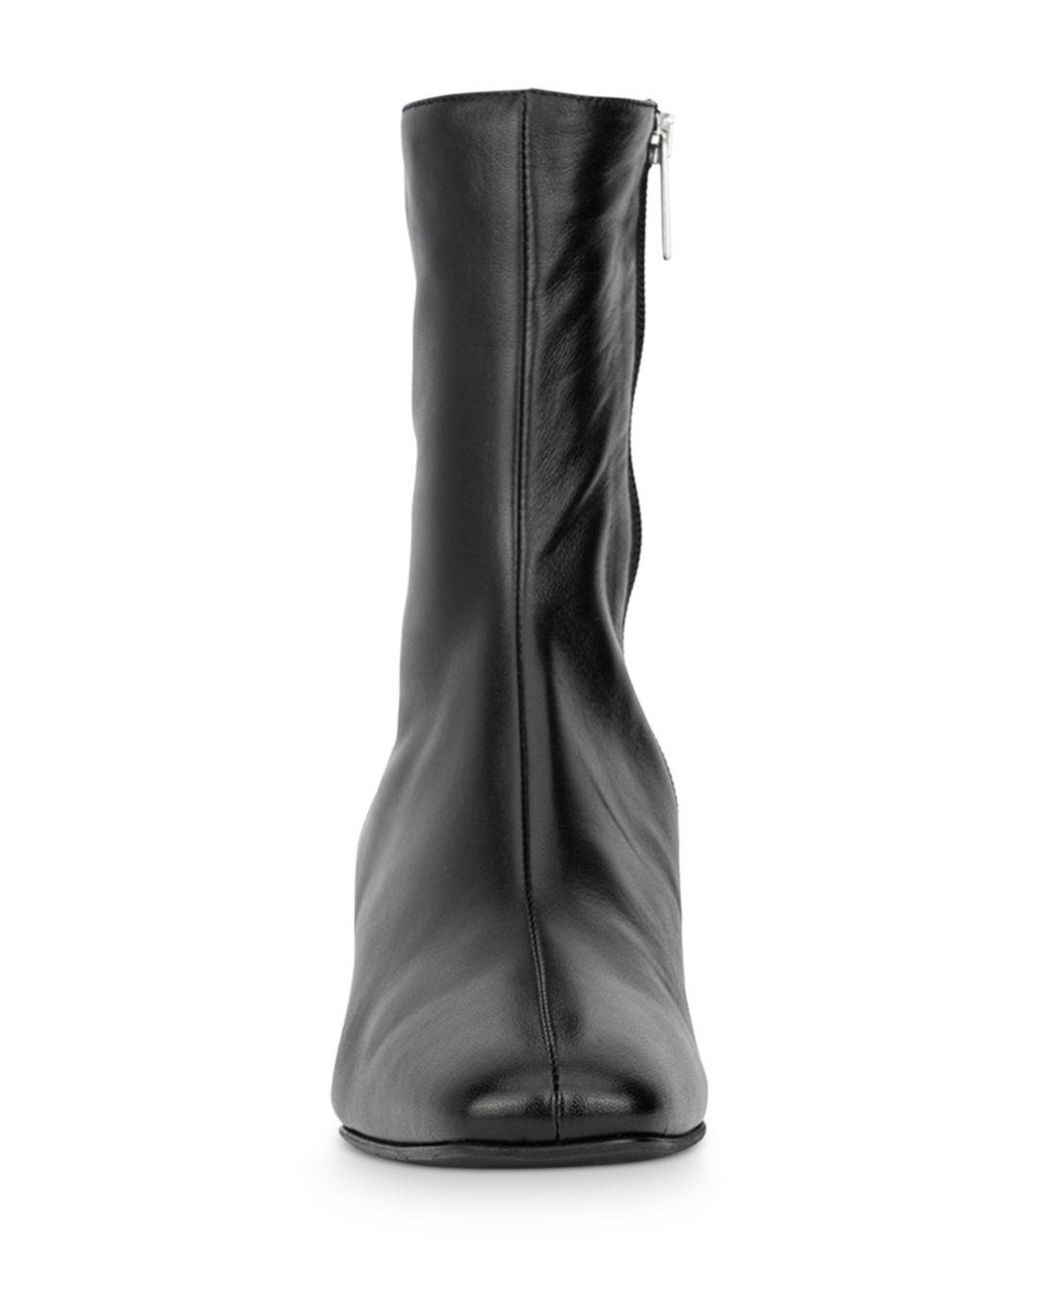 Aquatalia Selini Square Toe Leather Boots in Black | Lyst